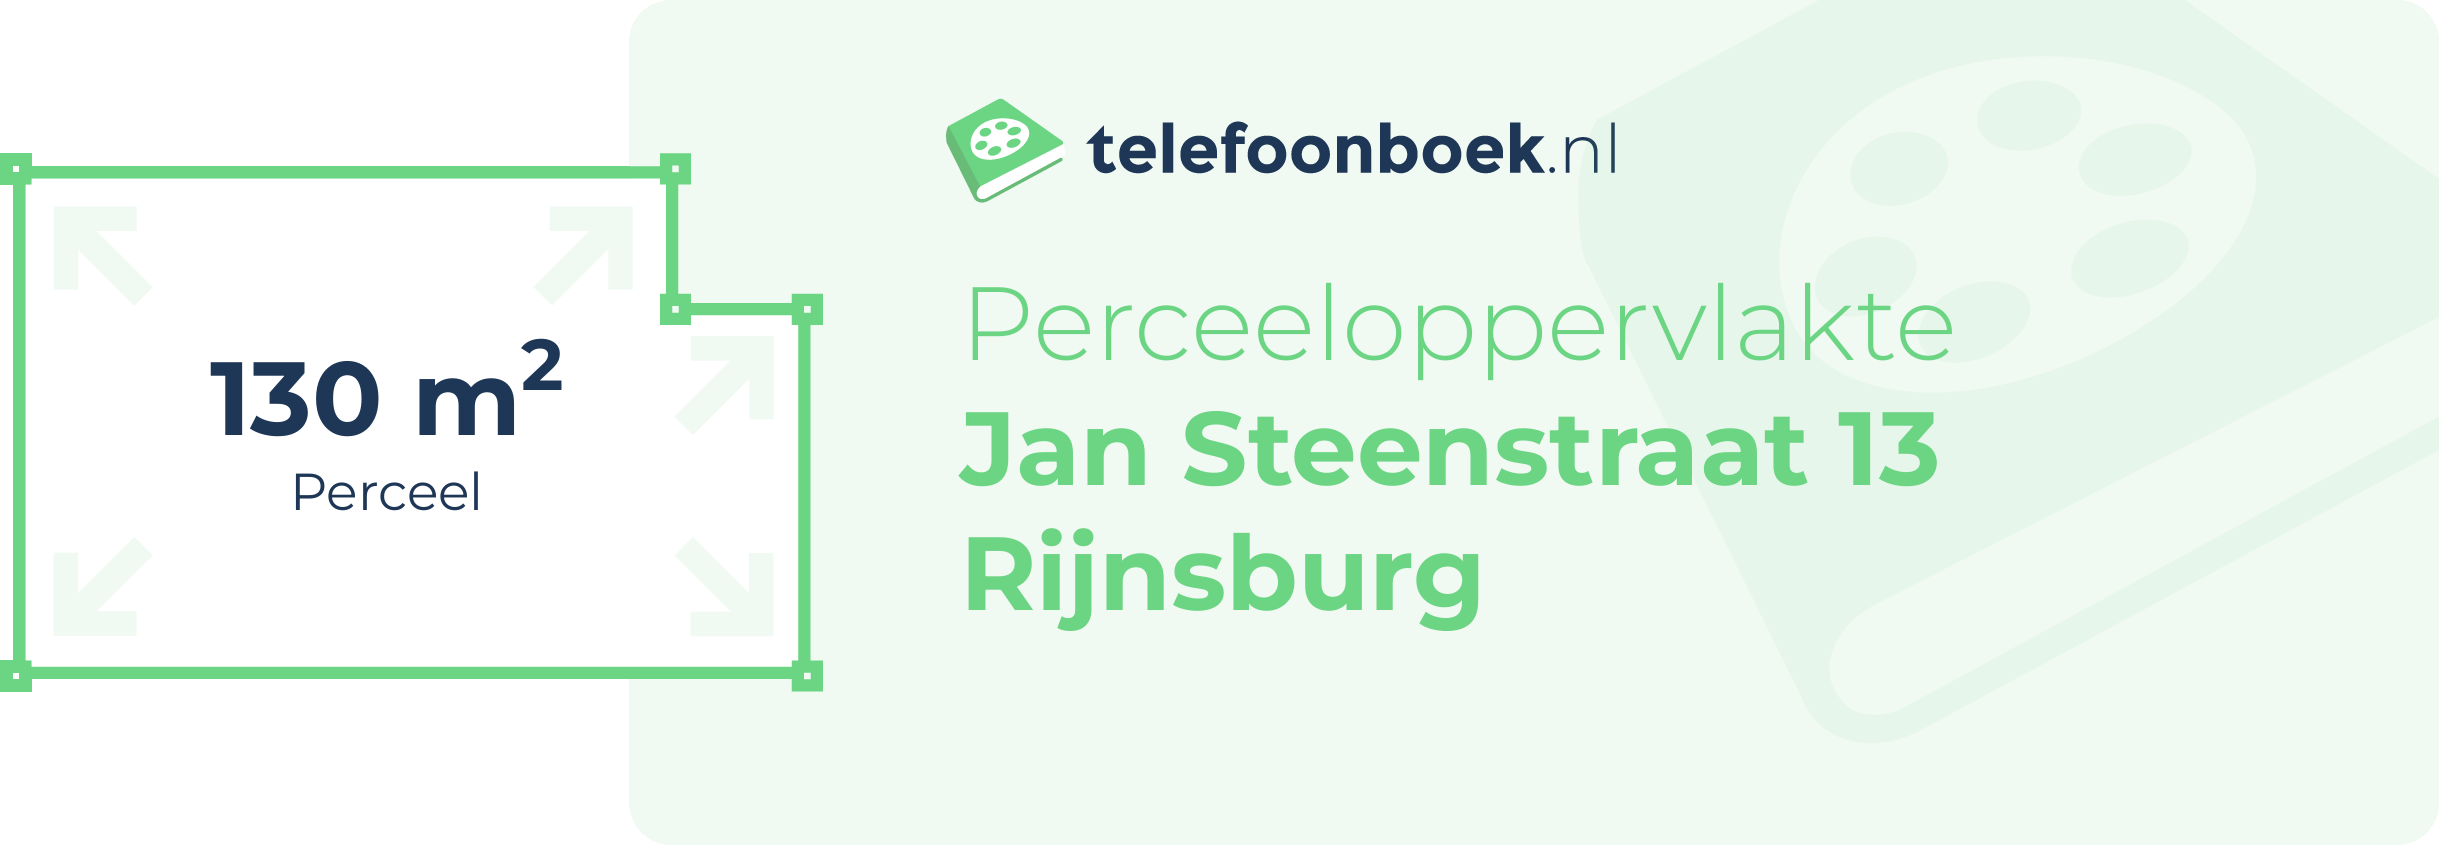 Perceeloppervlakte Jan Steenstraat 13 Rijnsburg